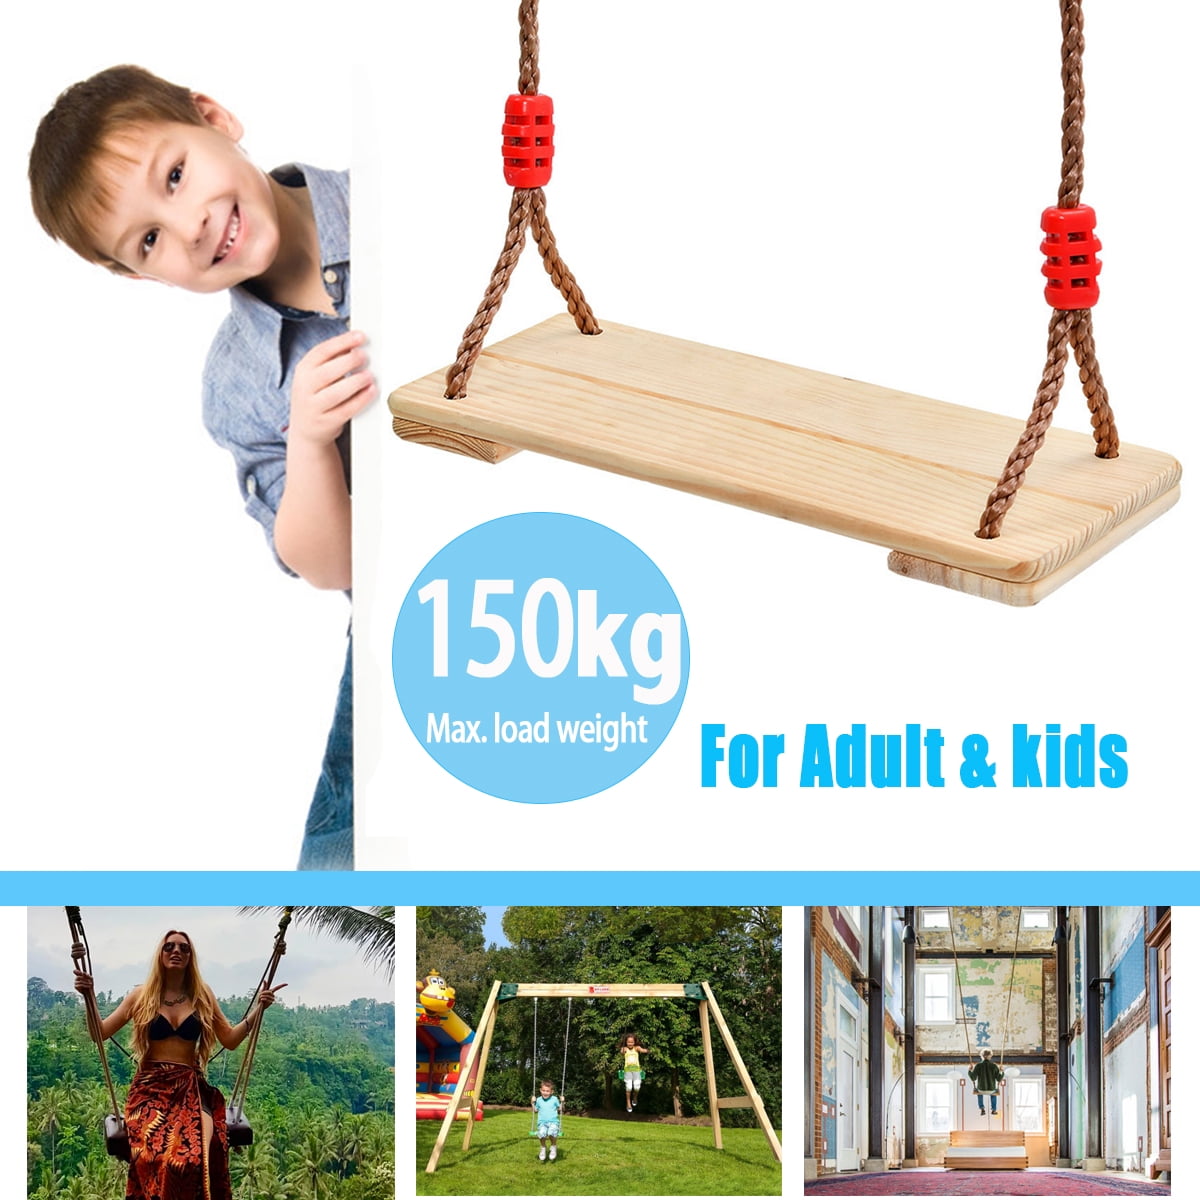 Wooden Swing Kids Seat Swing Rope Tree Fun Outdoor Summer Play 330lbs Capicity